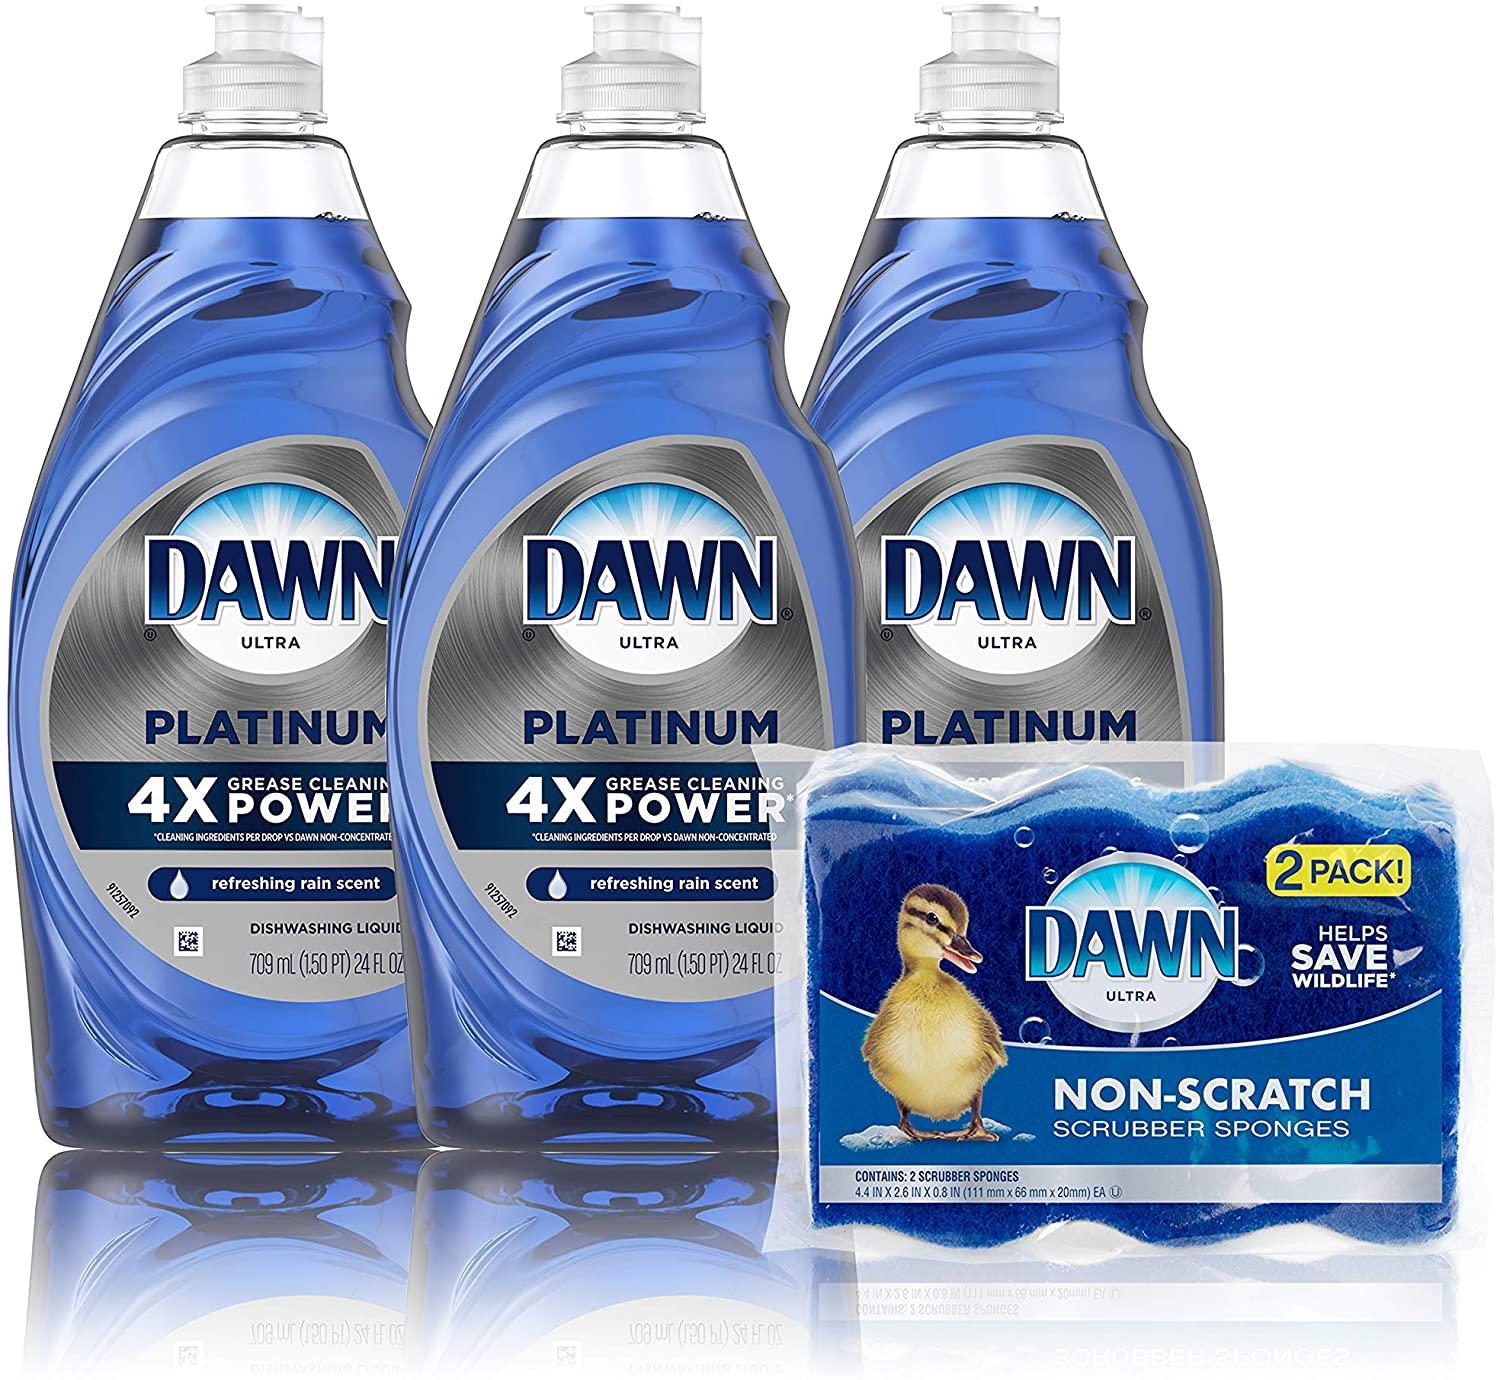 3 Dawn Ultra Platinum Liquid Dishwashing Soaps for $10.37 Shipped